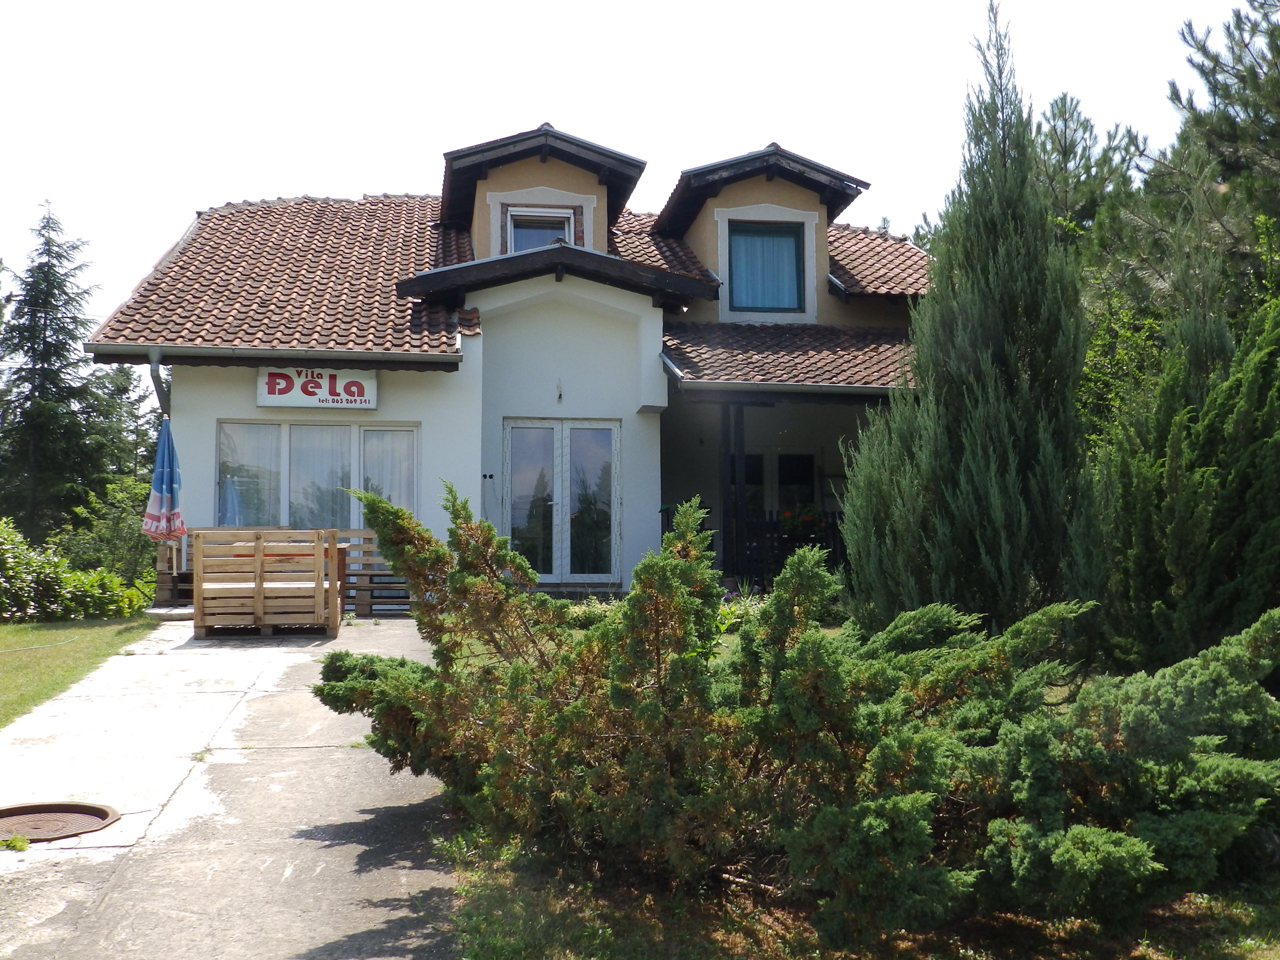 VILLA DJELA Private accommodation Srebrno jezero - Photo 1